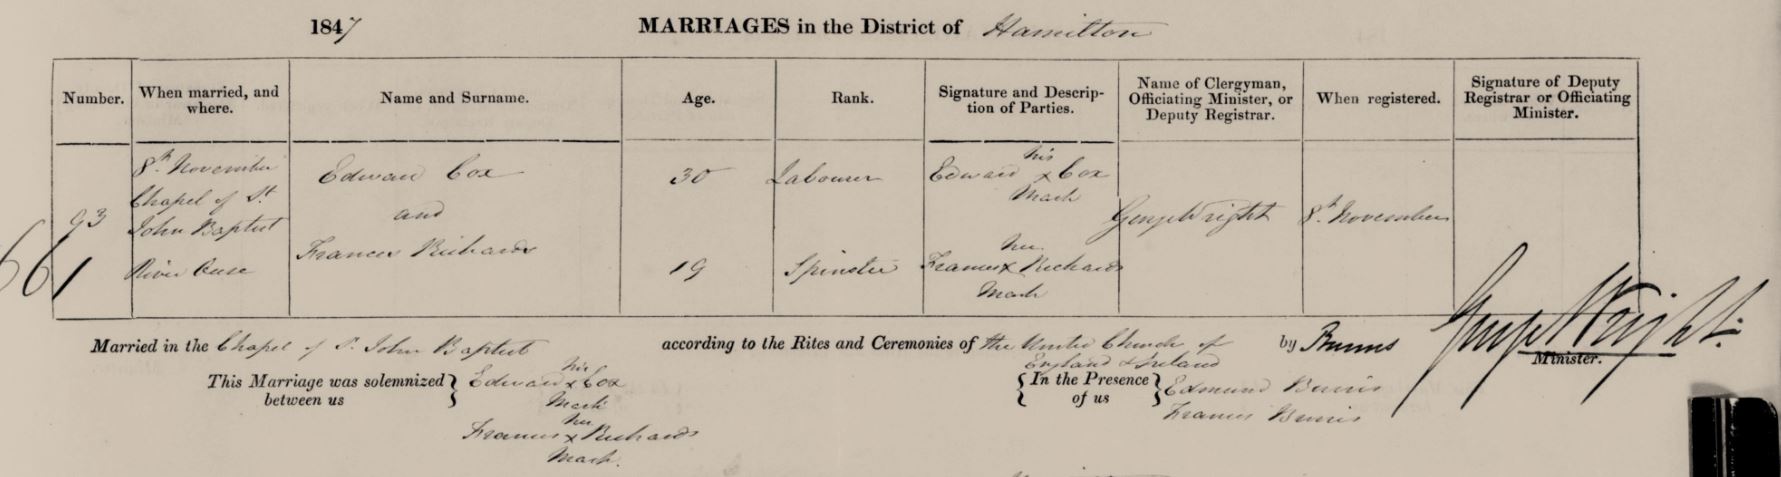 Frances Cox marriage